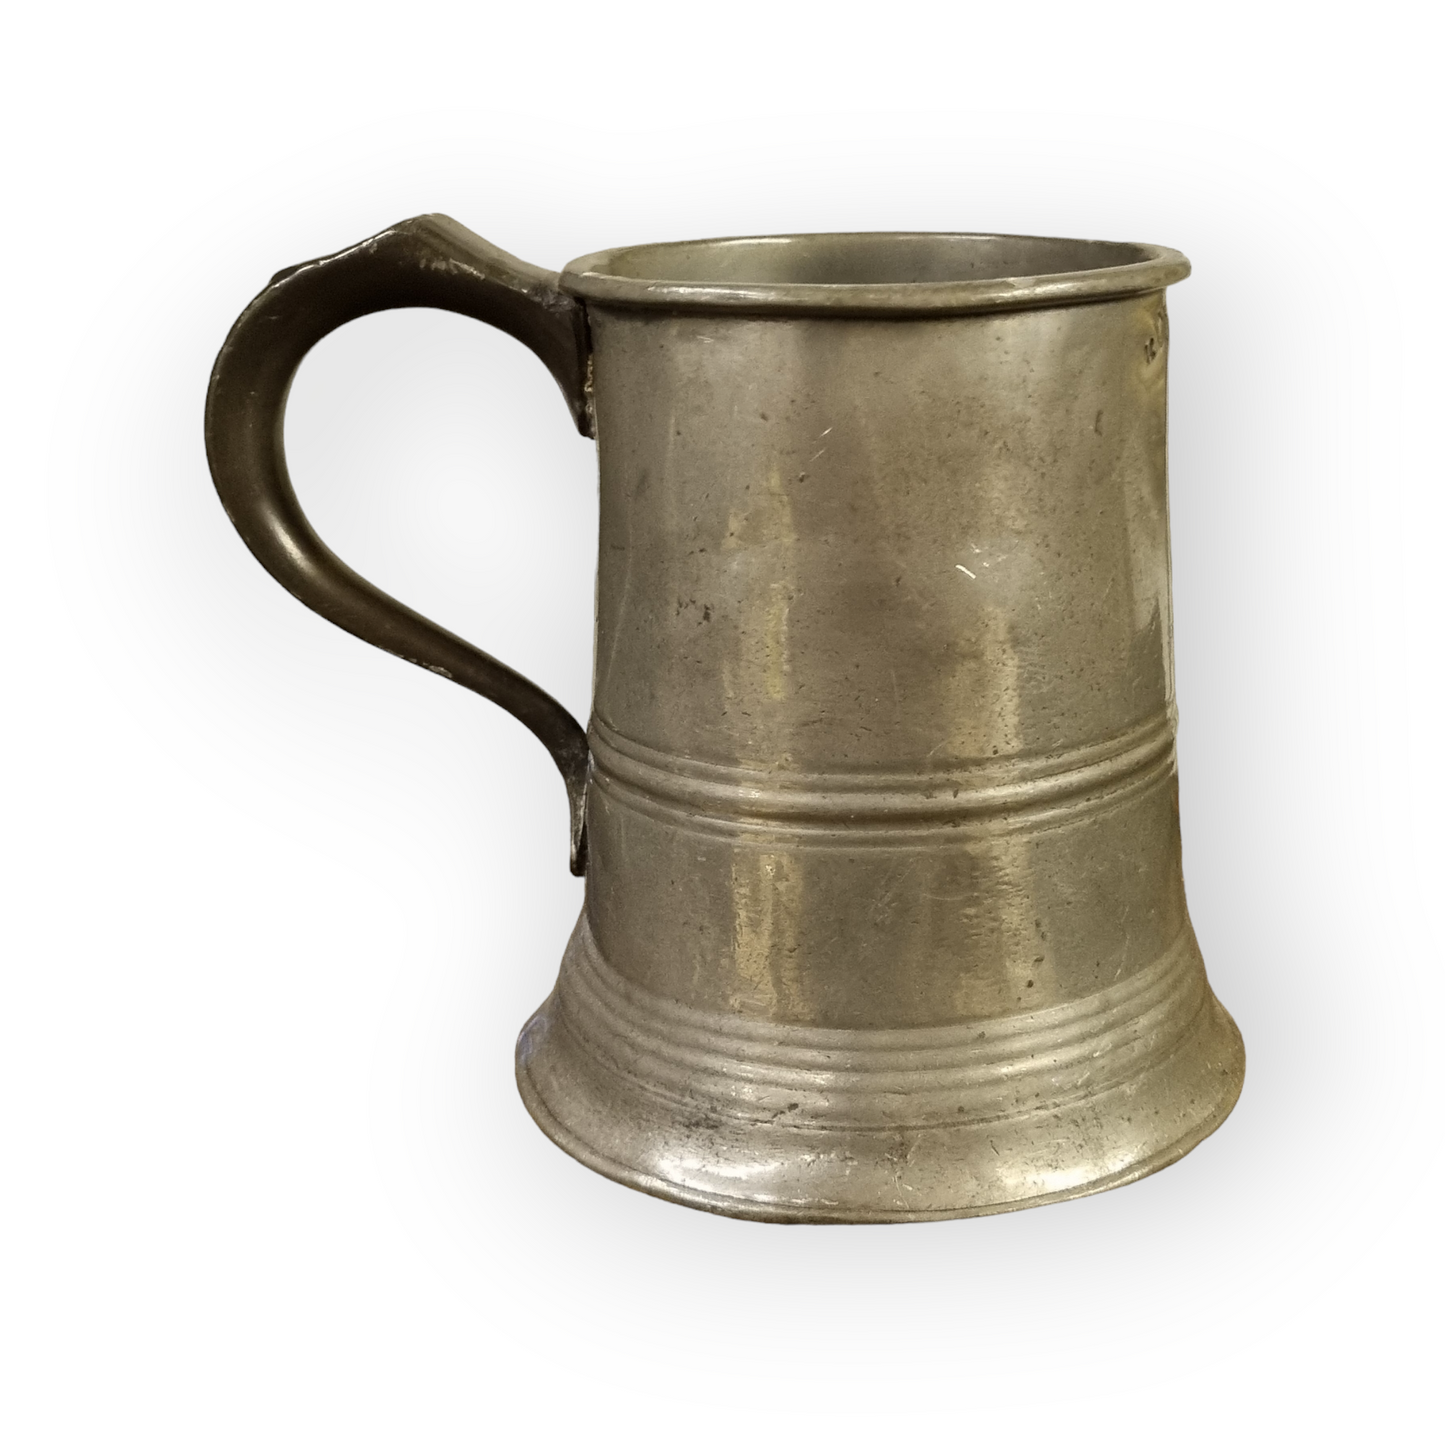 19th Century English Antique Pewter 1 Pint Tankard, Attributed to "James Yates"